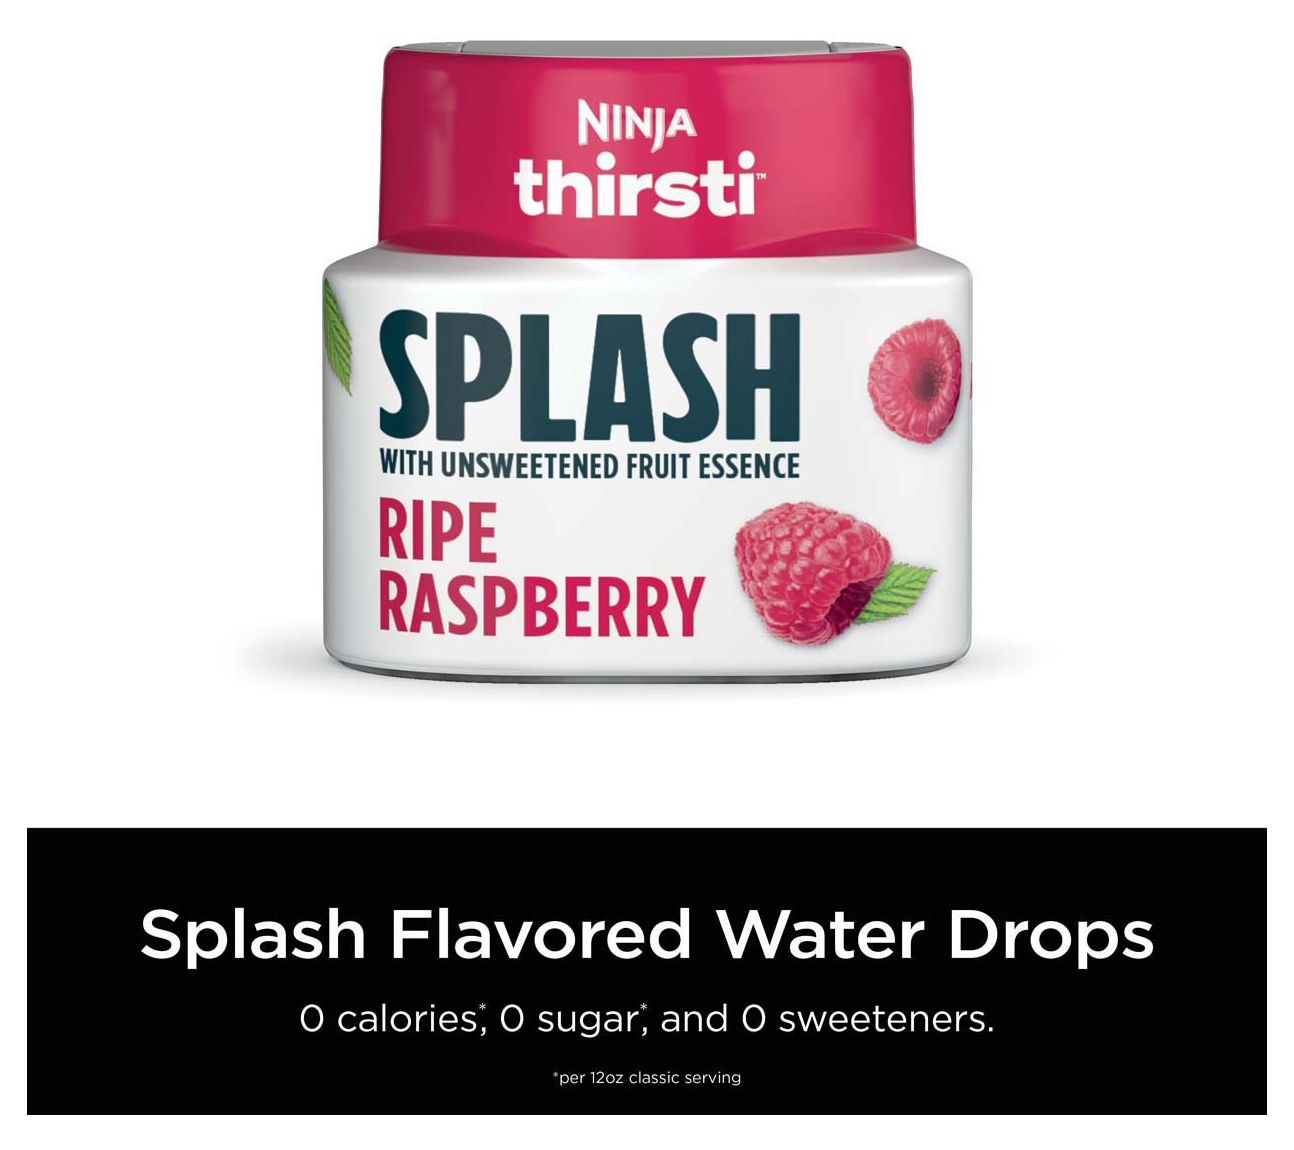 Ninja Thirsti Splash Ripe Raspberry Flavored Water Drops